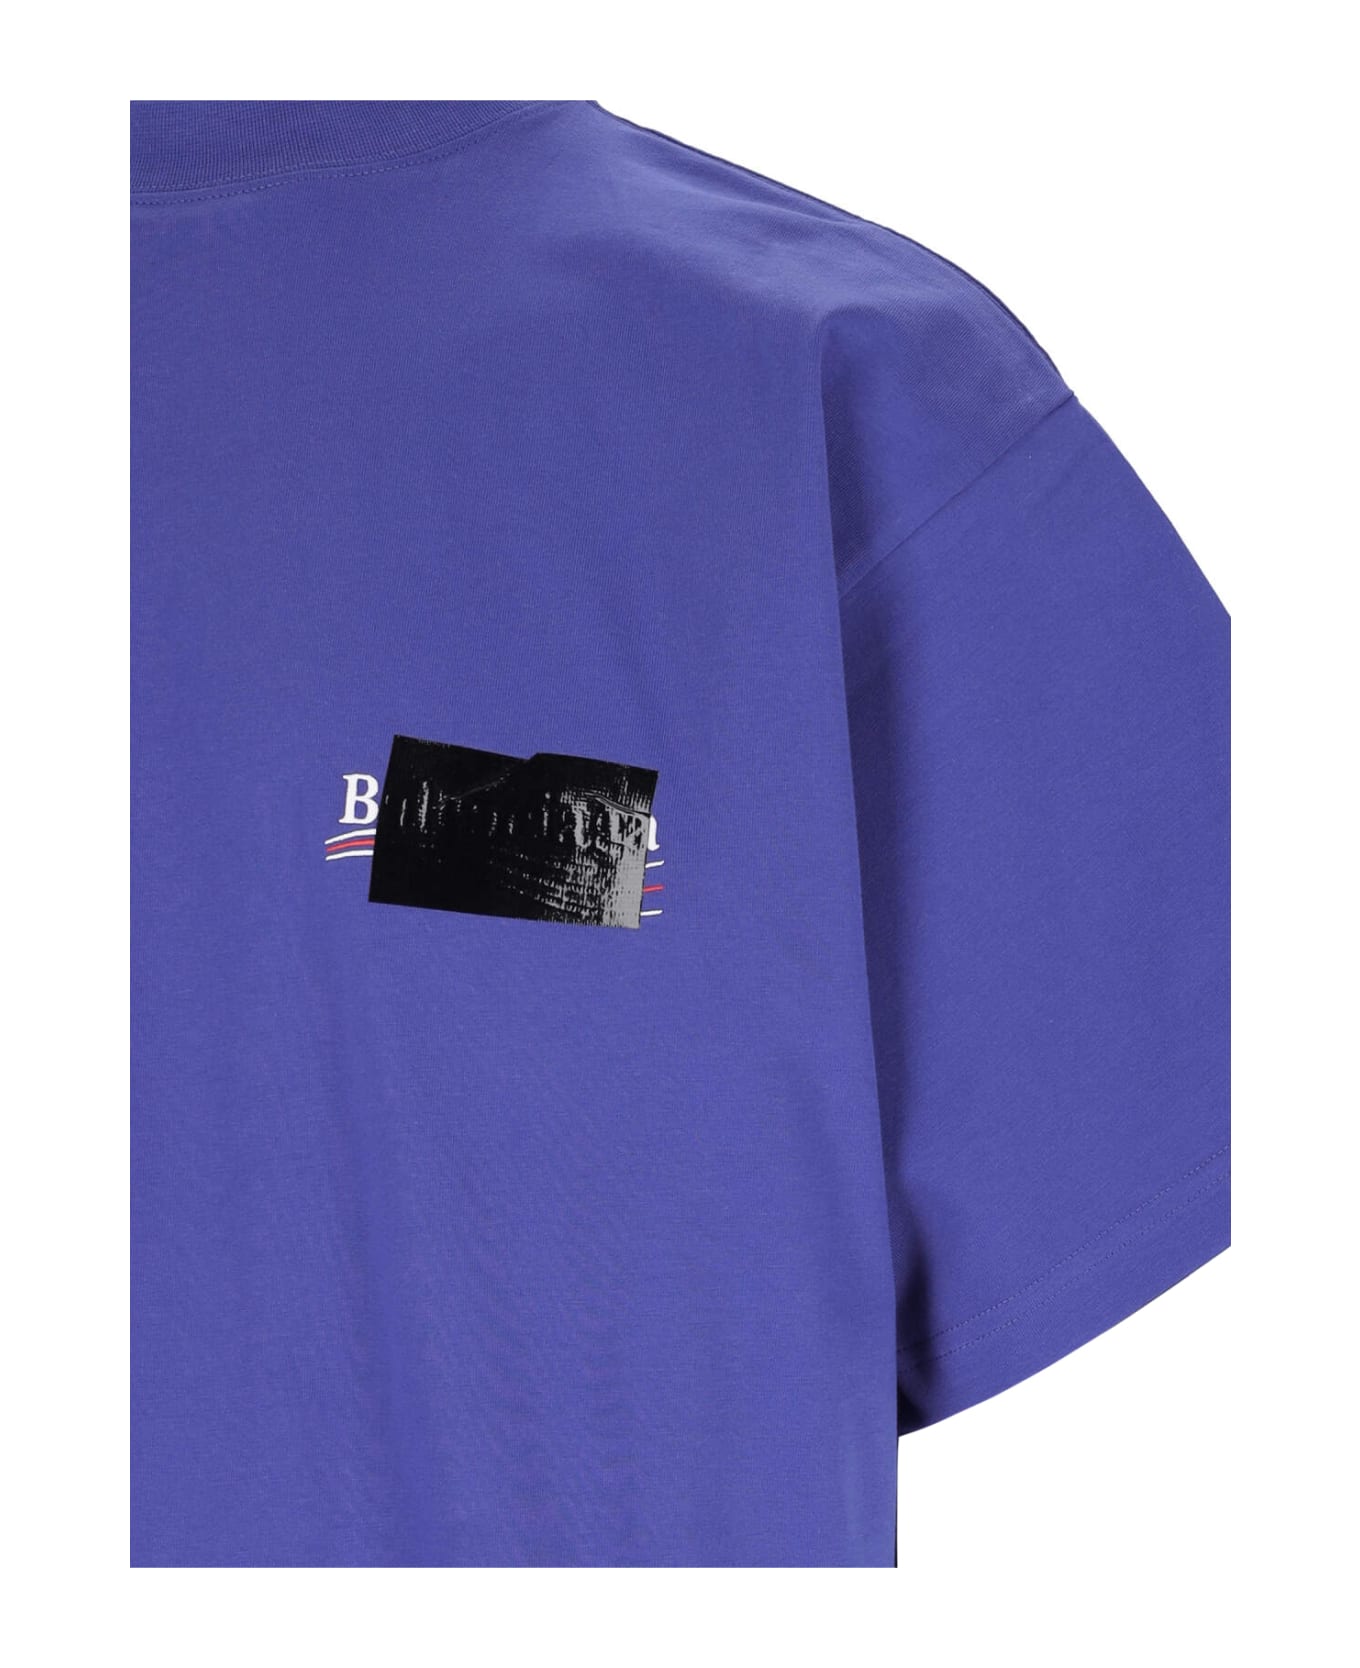 Balenciaga 'gaffer' T-shirt - Purple